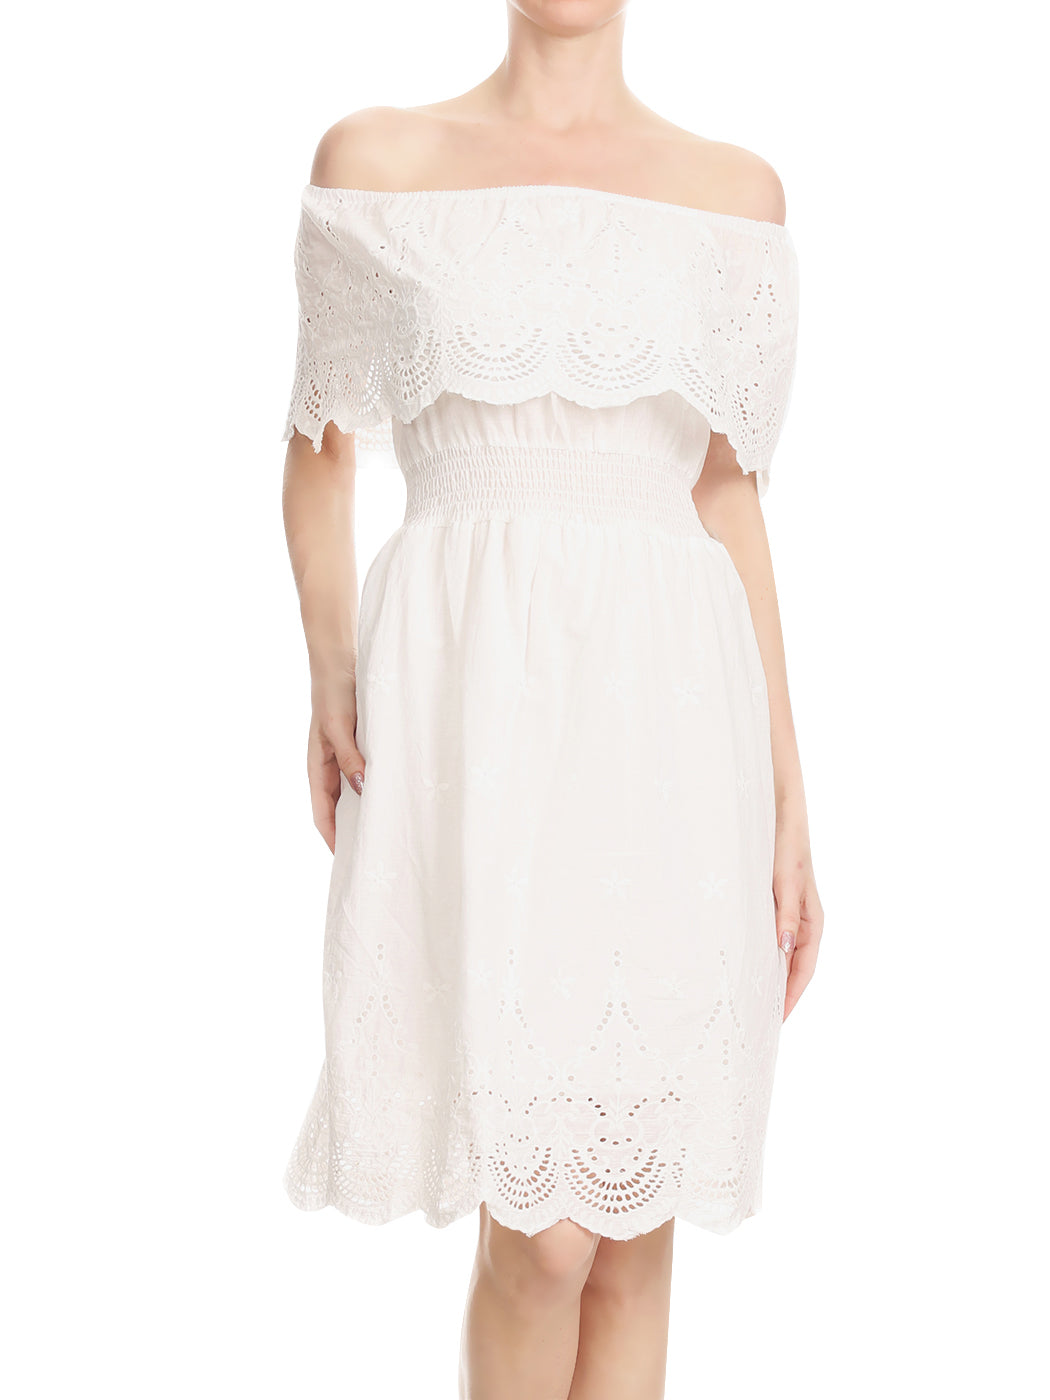 Womens Casual Cotton Off Shoulder Ruffle Short Summer Sun Dress, White, Small